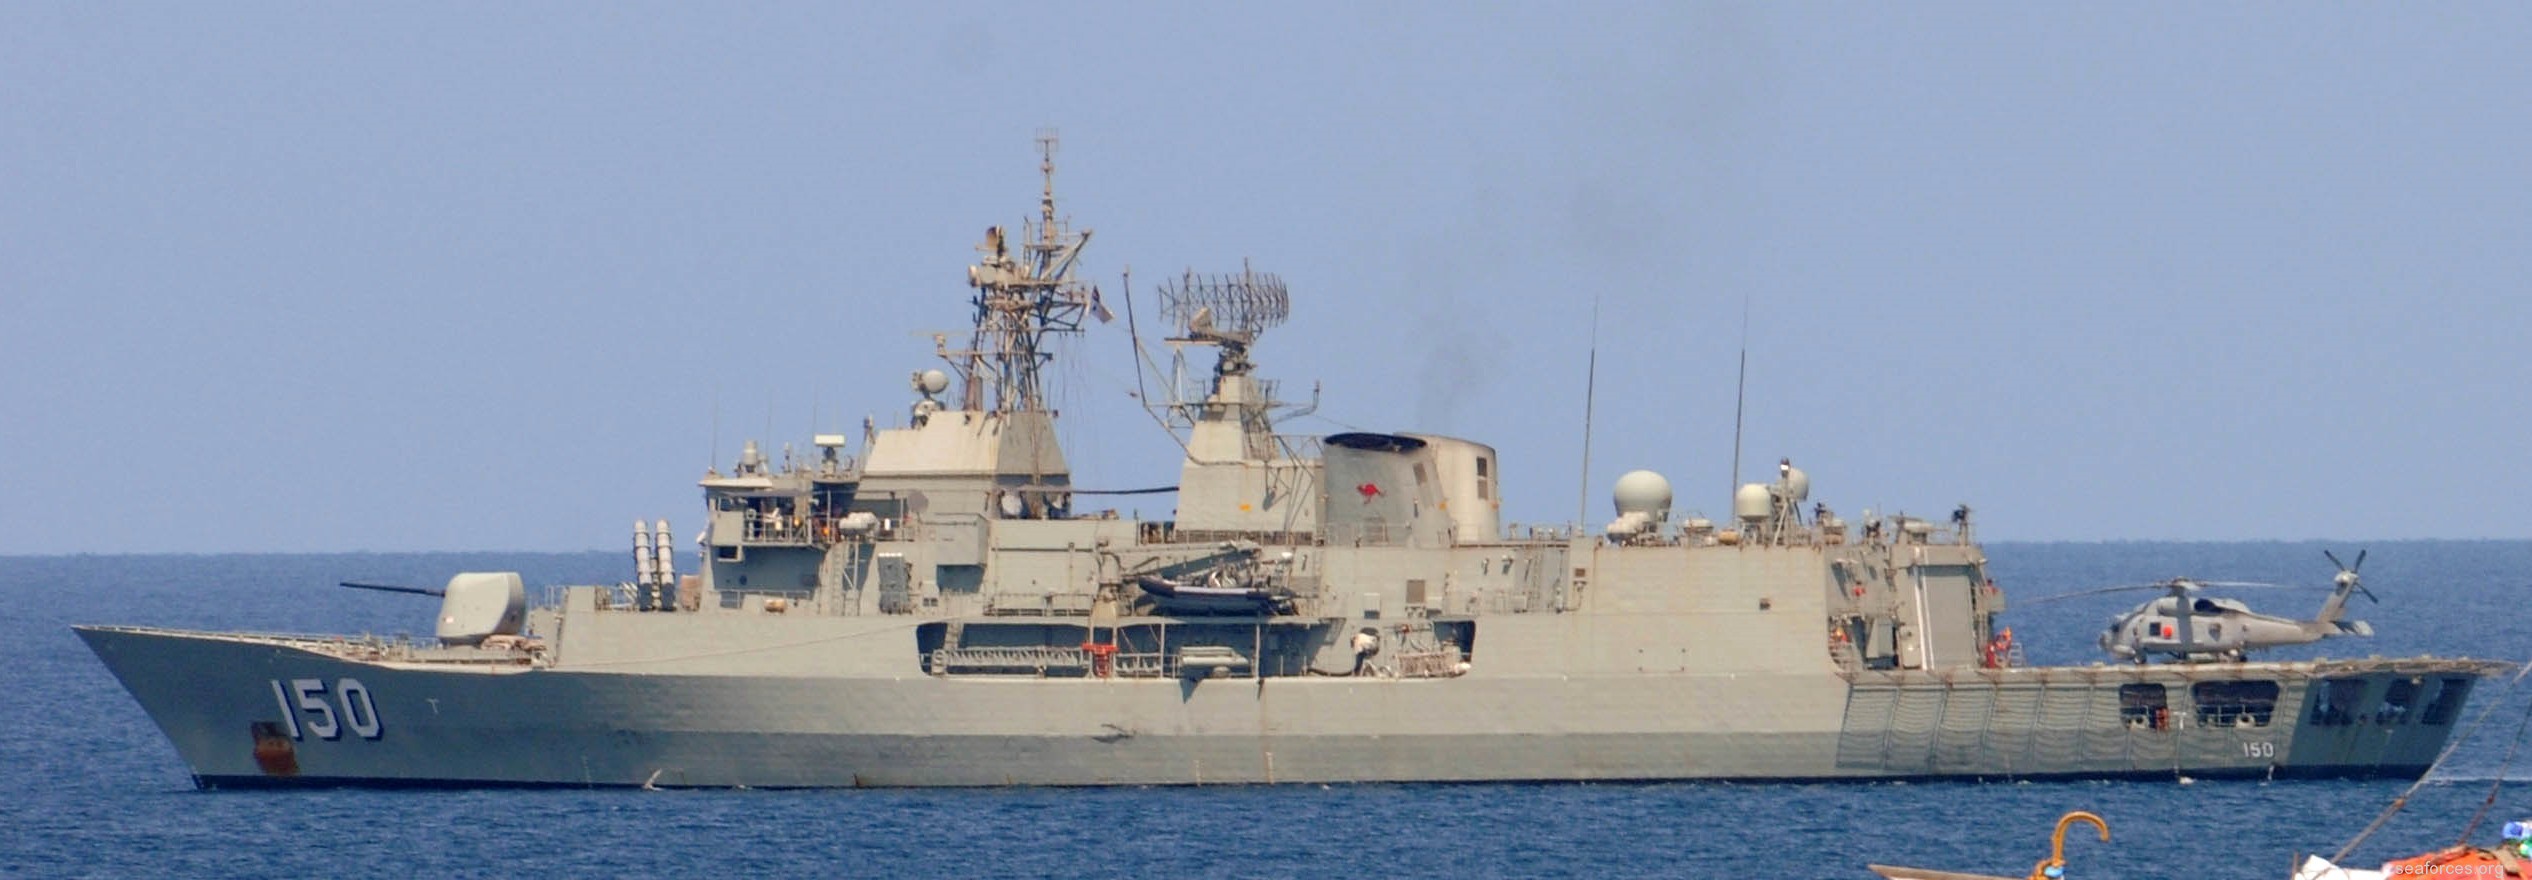 ffh-150 hmas anzac frigate royal australian navy 02